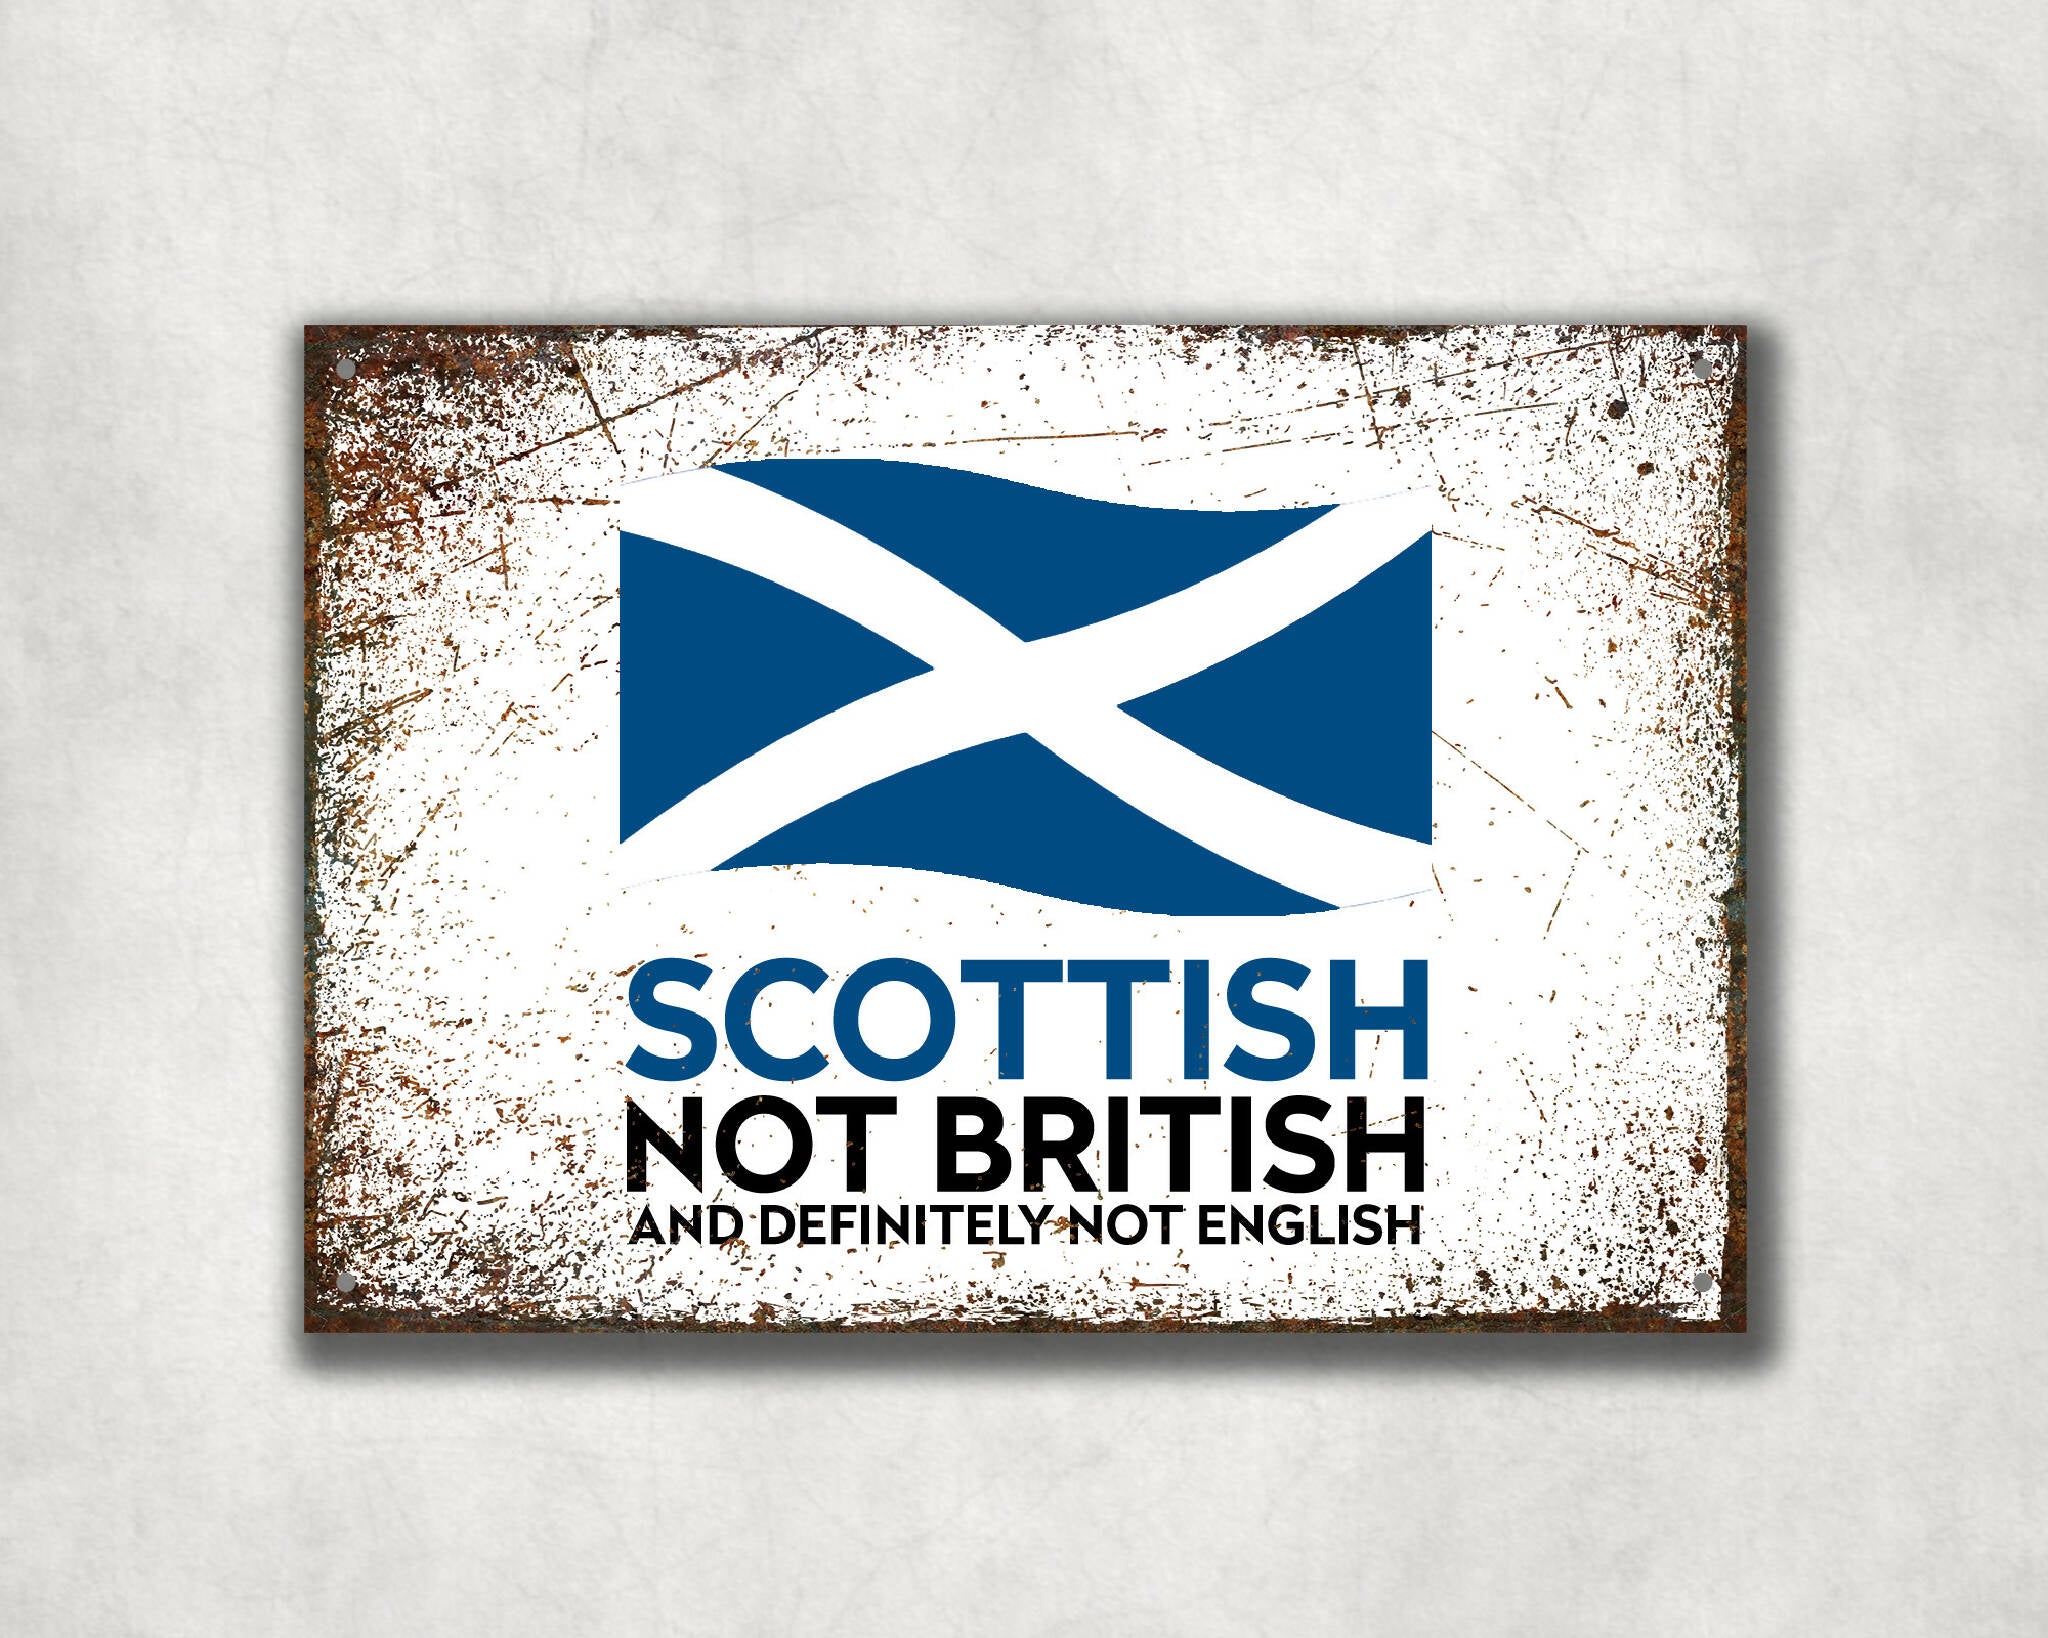 Scottish Not British Definitely Not English | Aluminium Printed Metal Street Sign